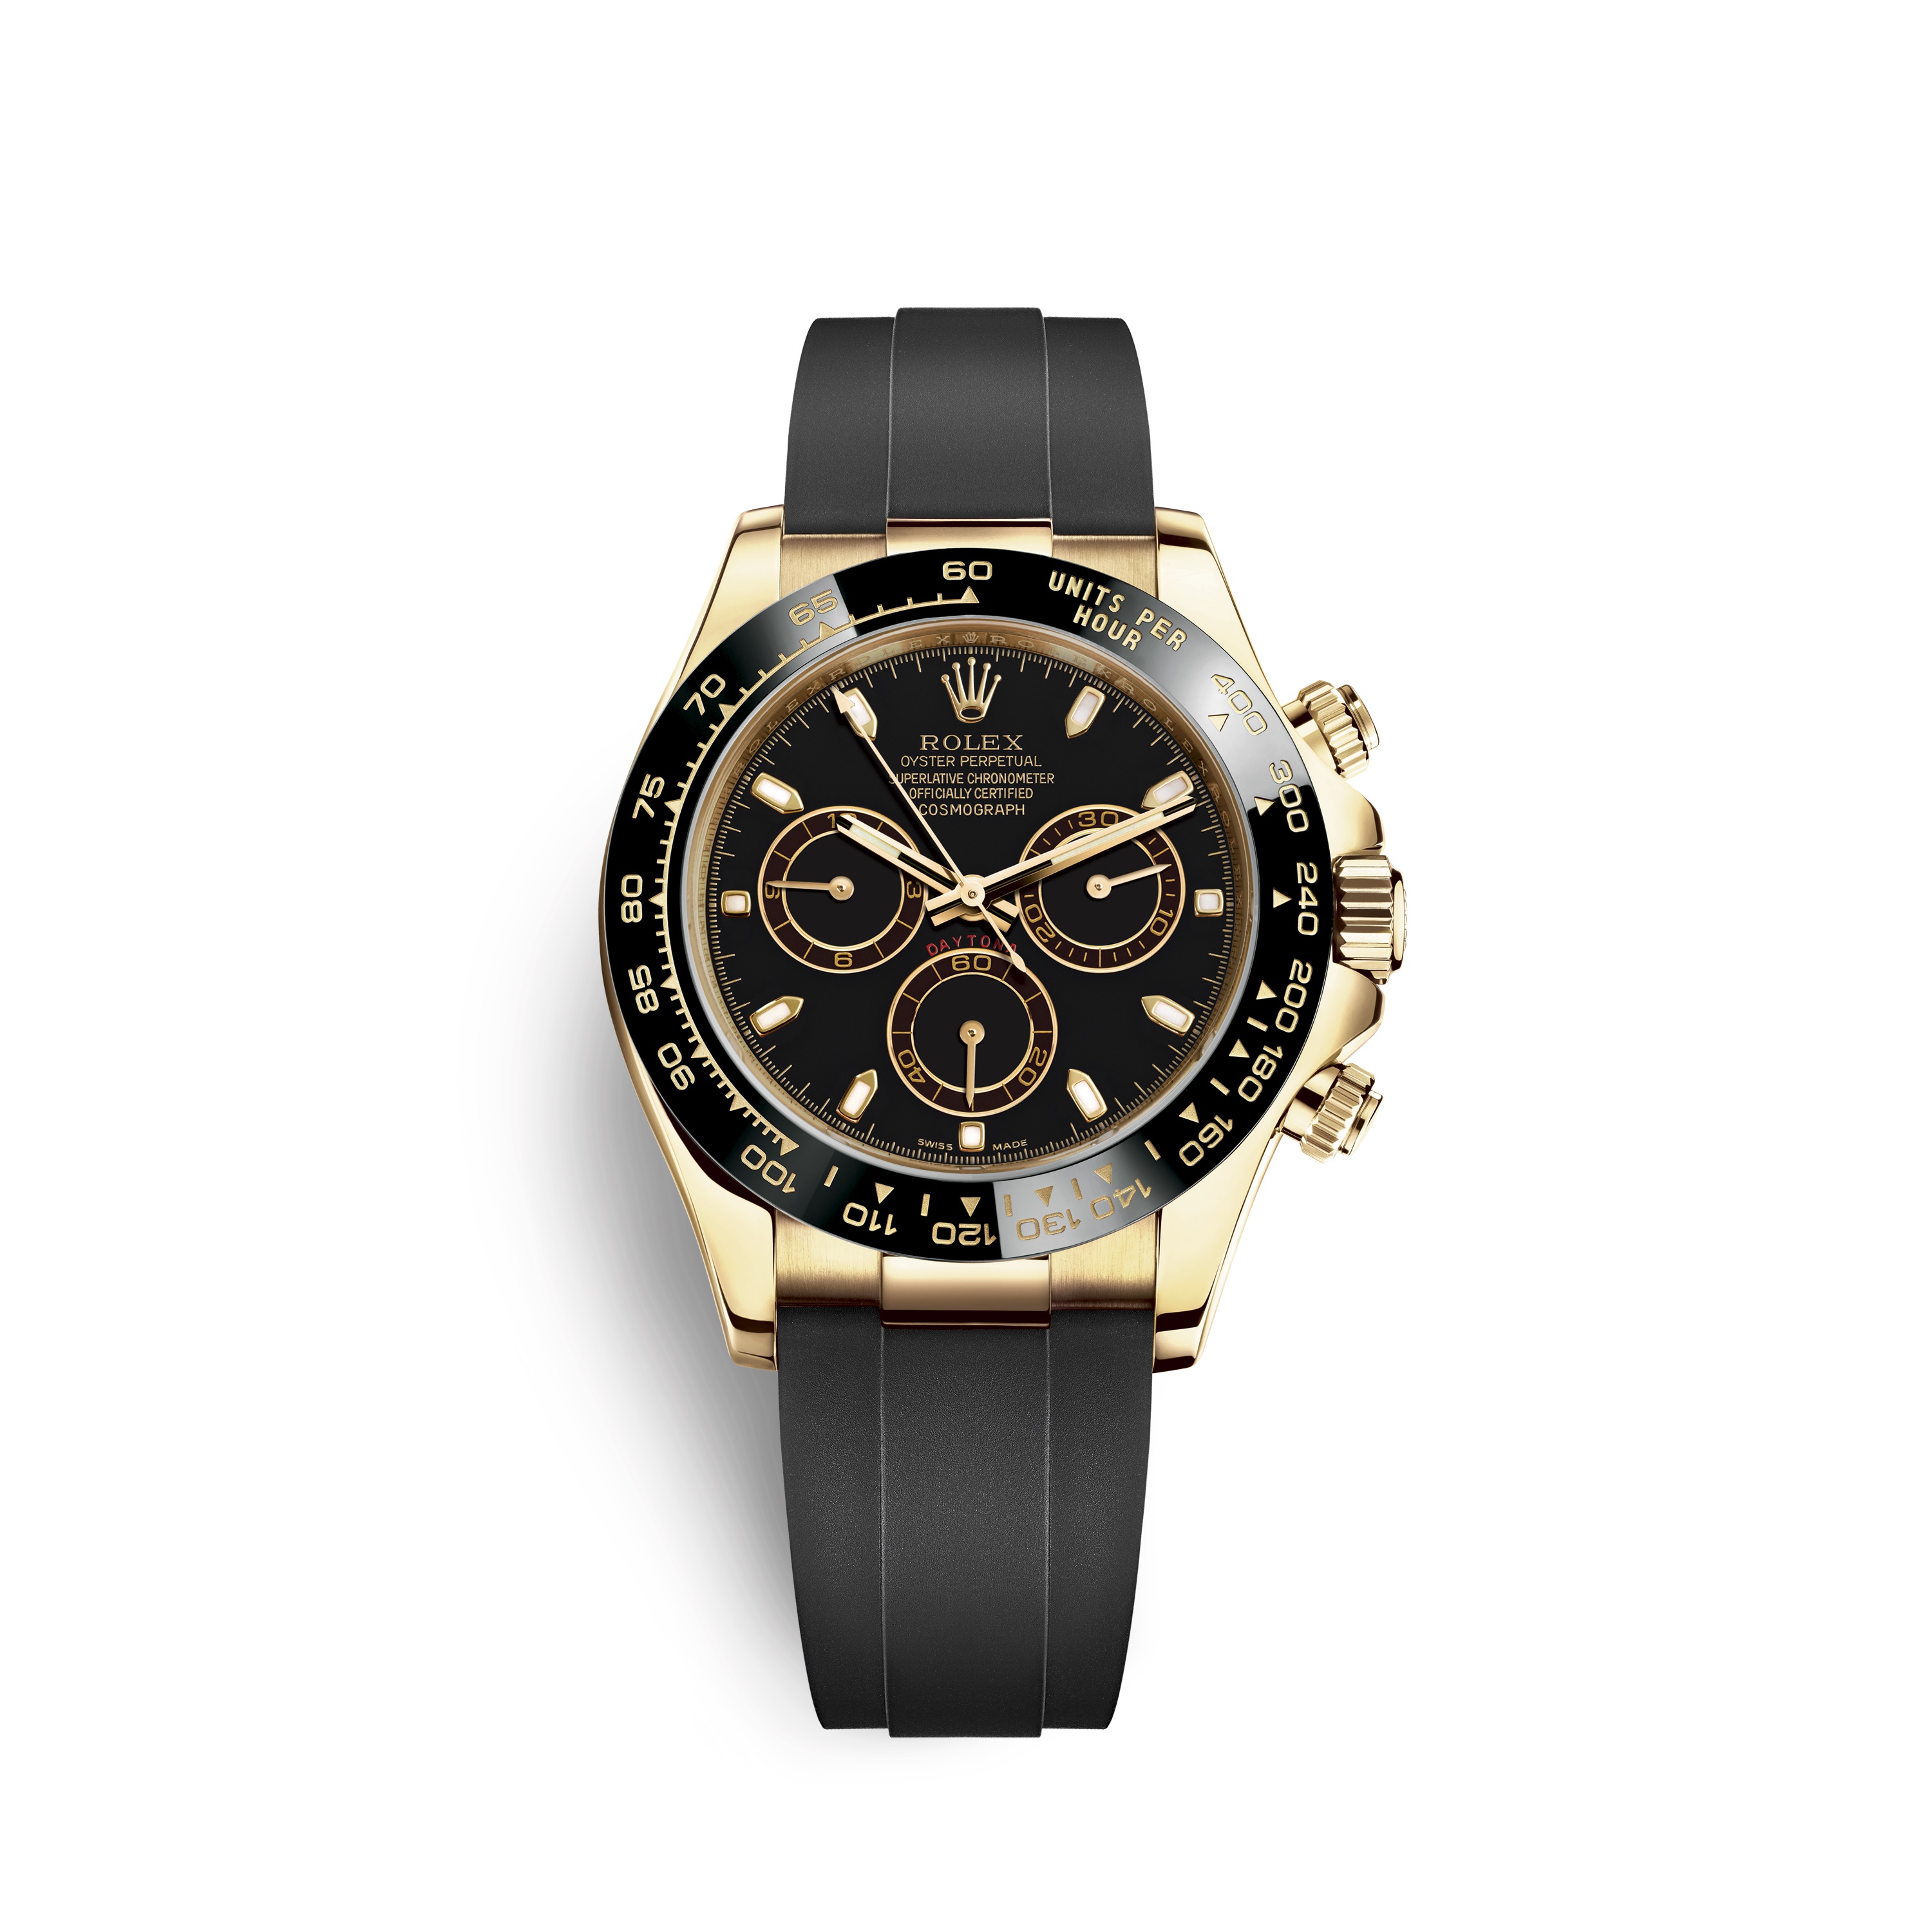 Cosmograph Daytona 116518LN Gold Watch (Black)